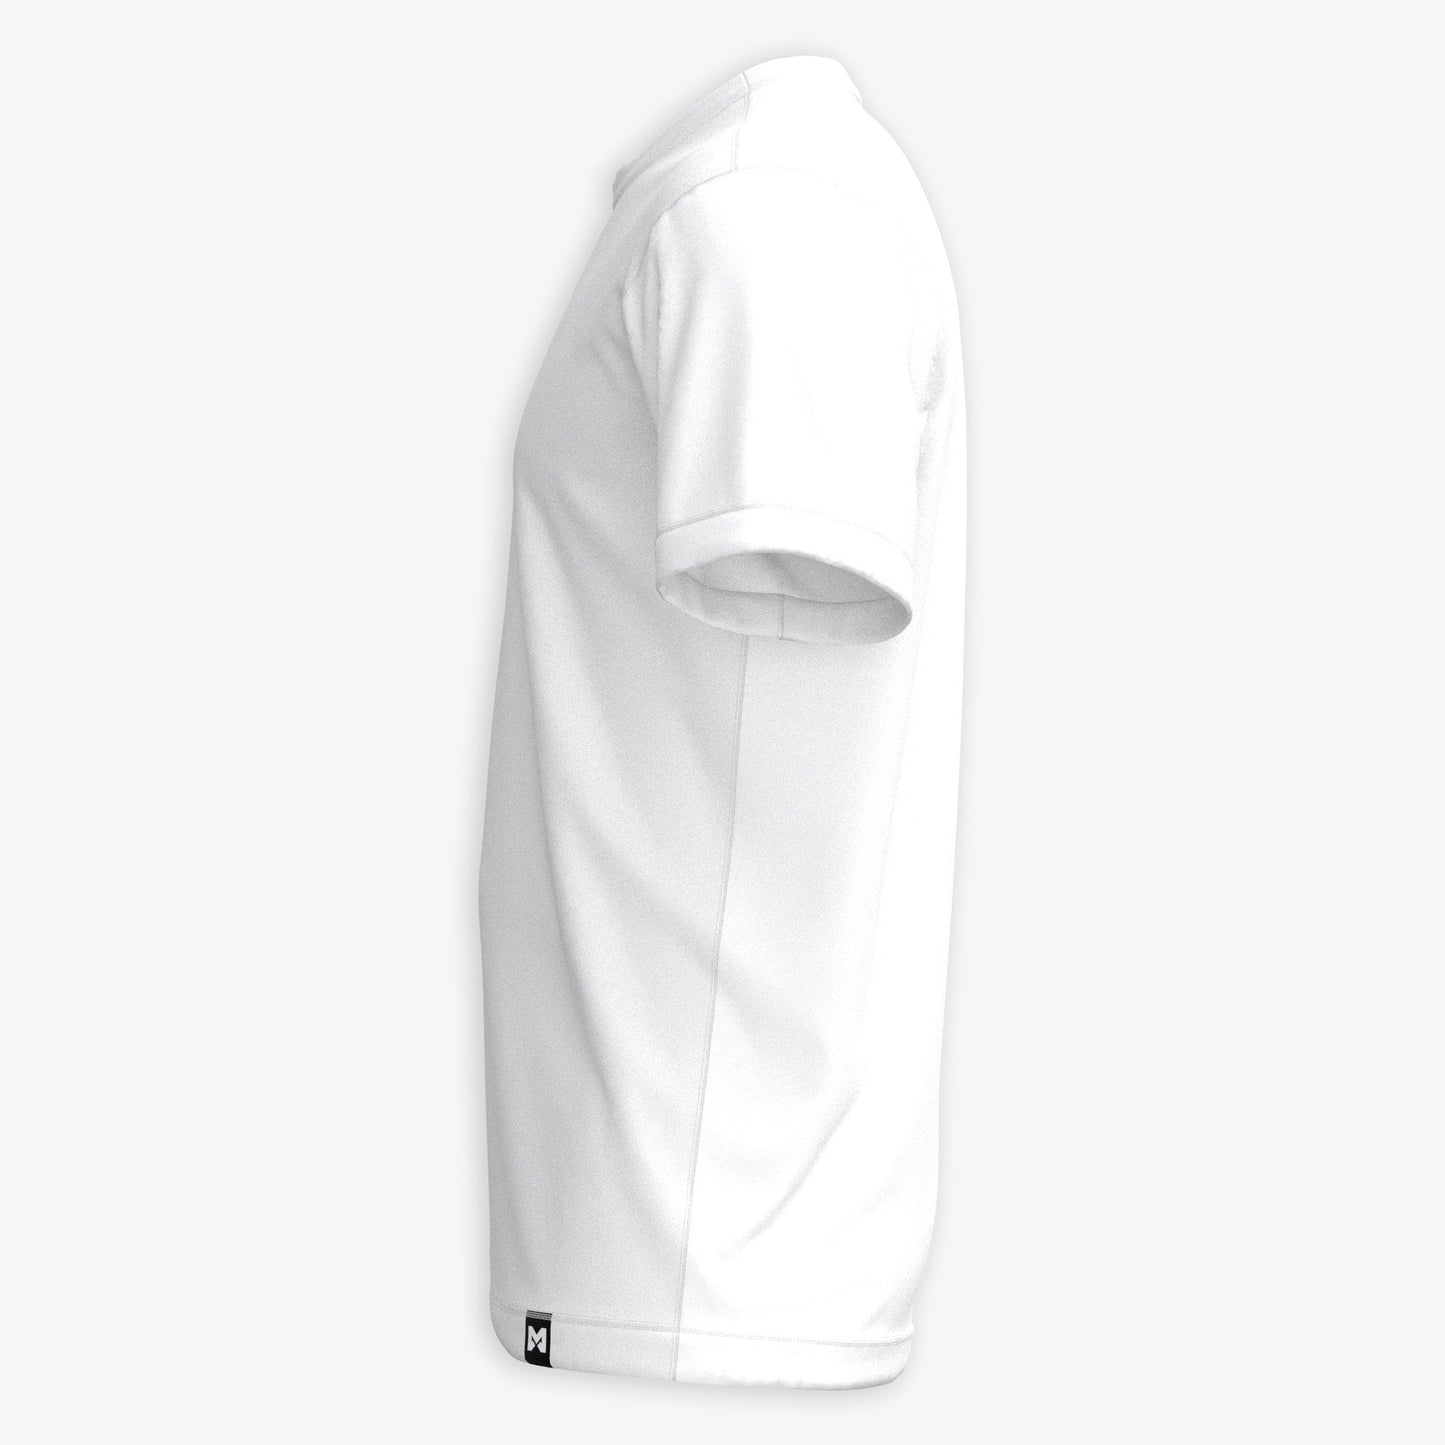 My Custom Design Physical product DryTECH T-shirt | Crew neck